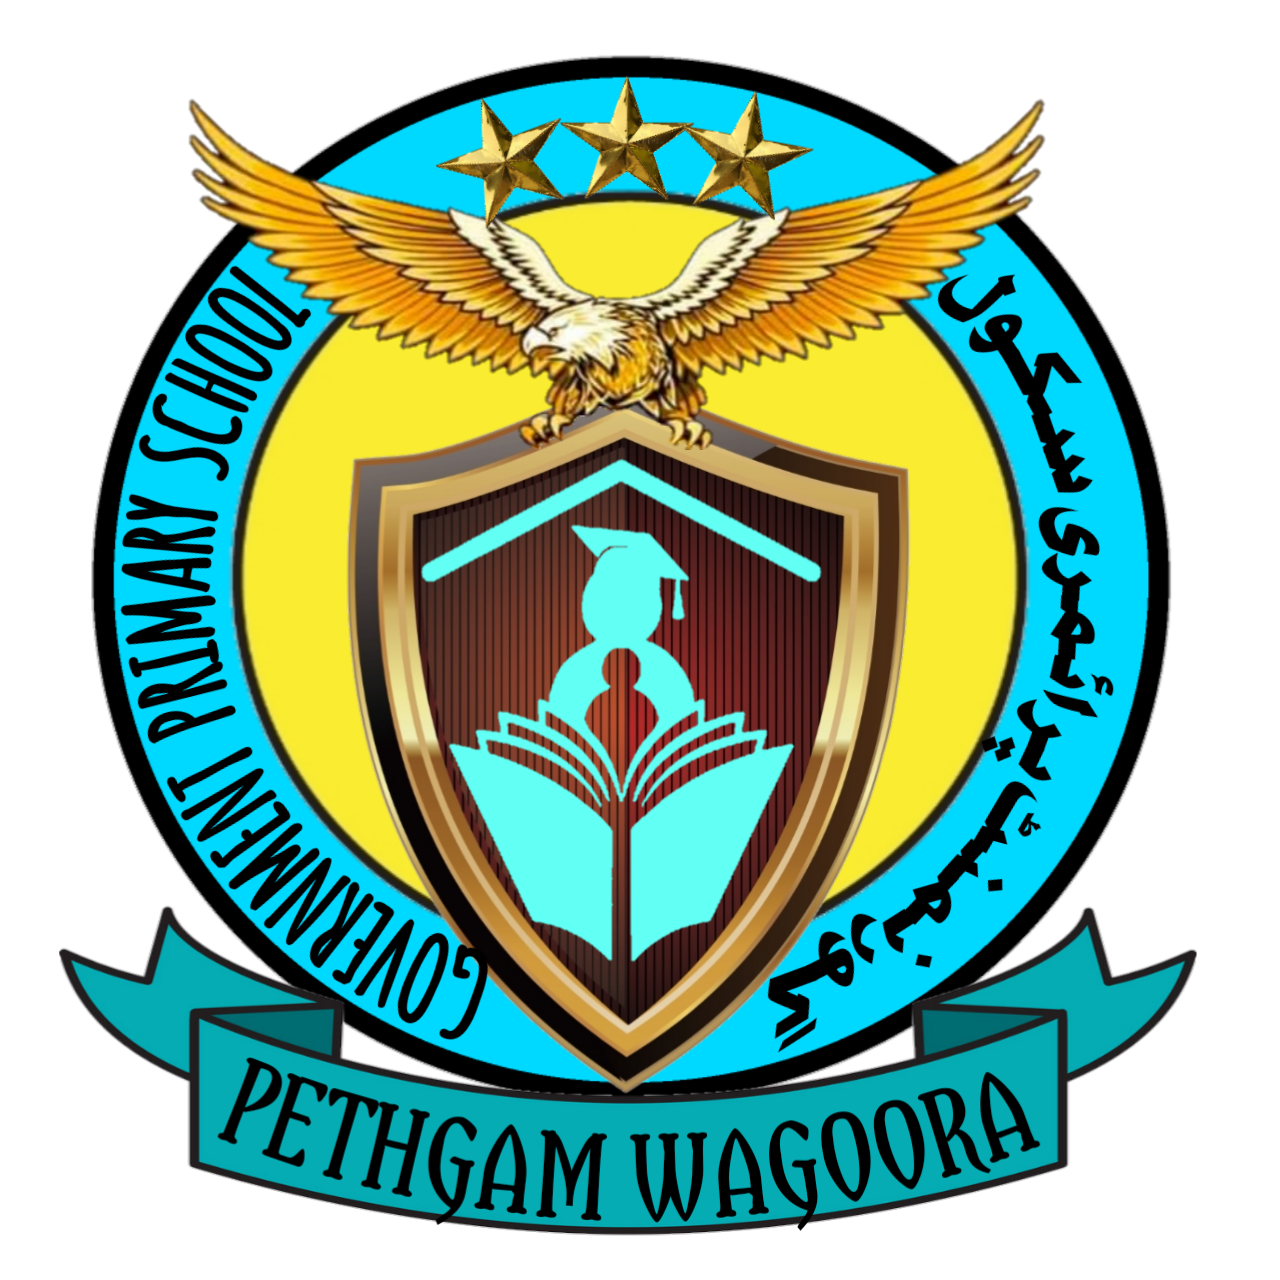 GOVERNMENT PRIMARY SCHOOL PETHGAM WAGOORA Logo